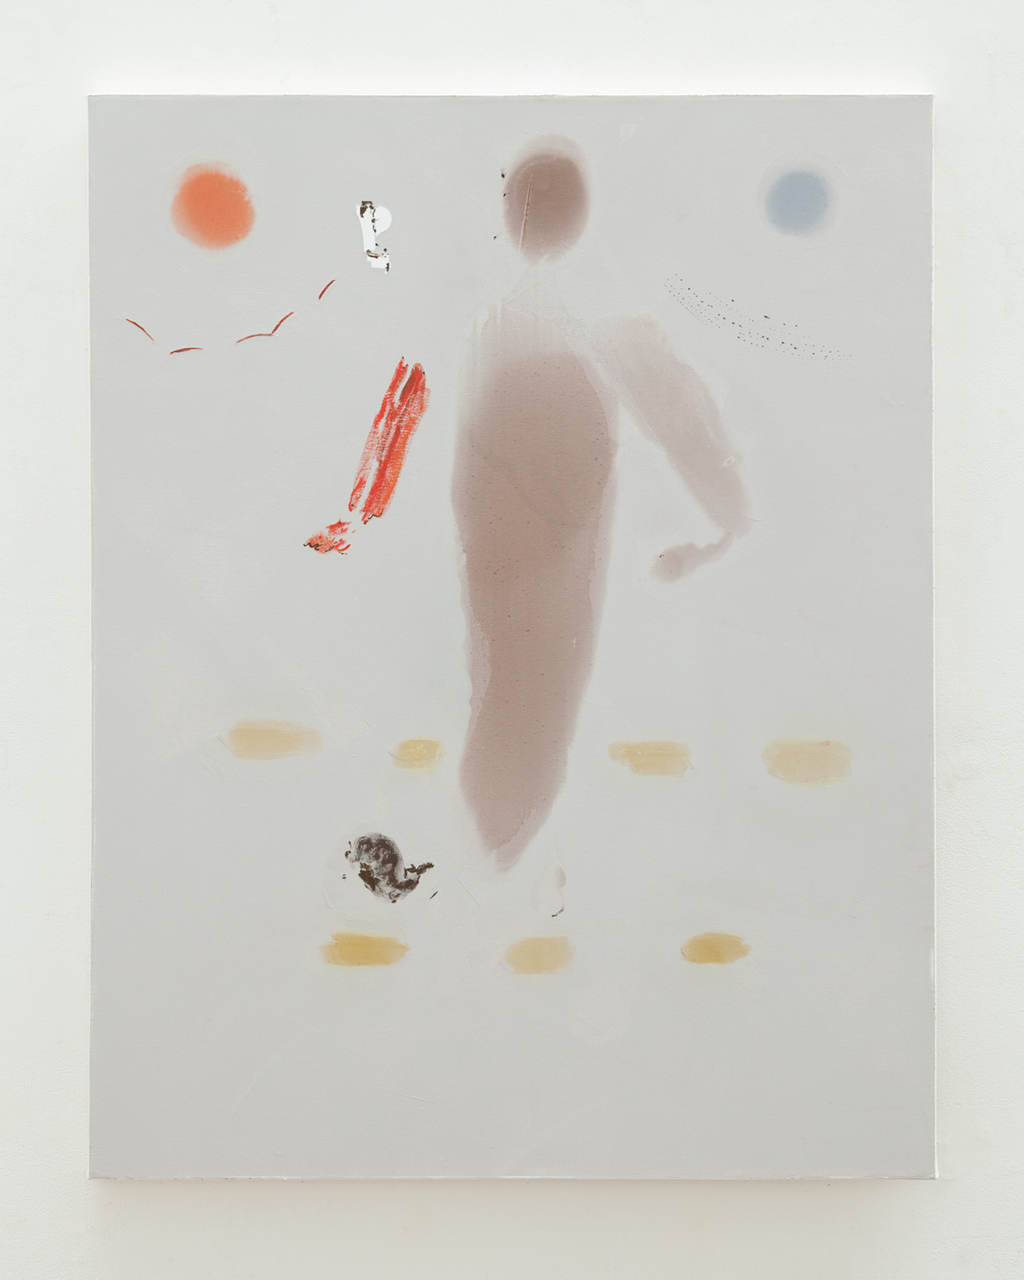 Henry Chapman_2015_Hangman_112x102cm_oil, acrylic and graphite on canvas_2015-hc-18